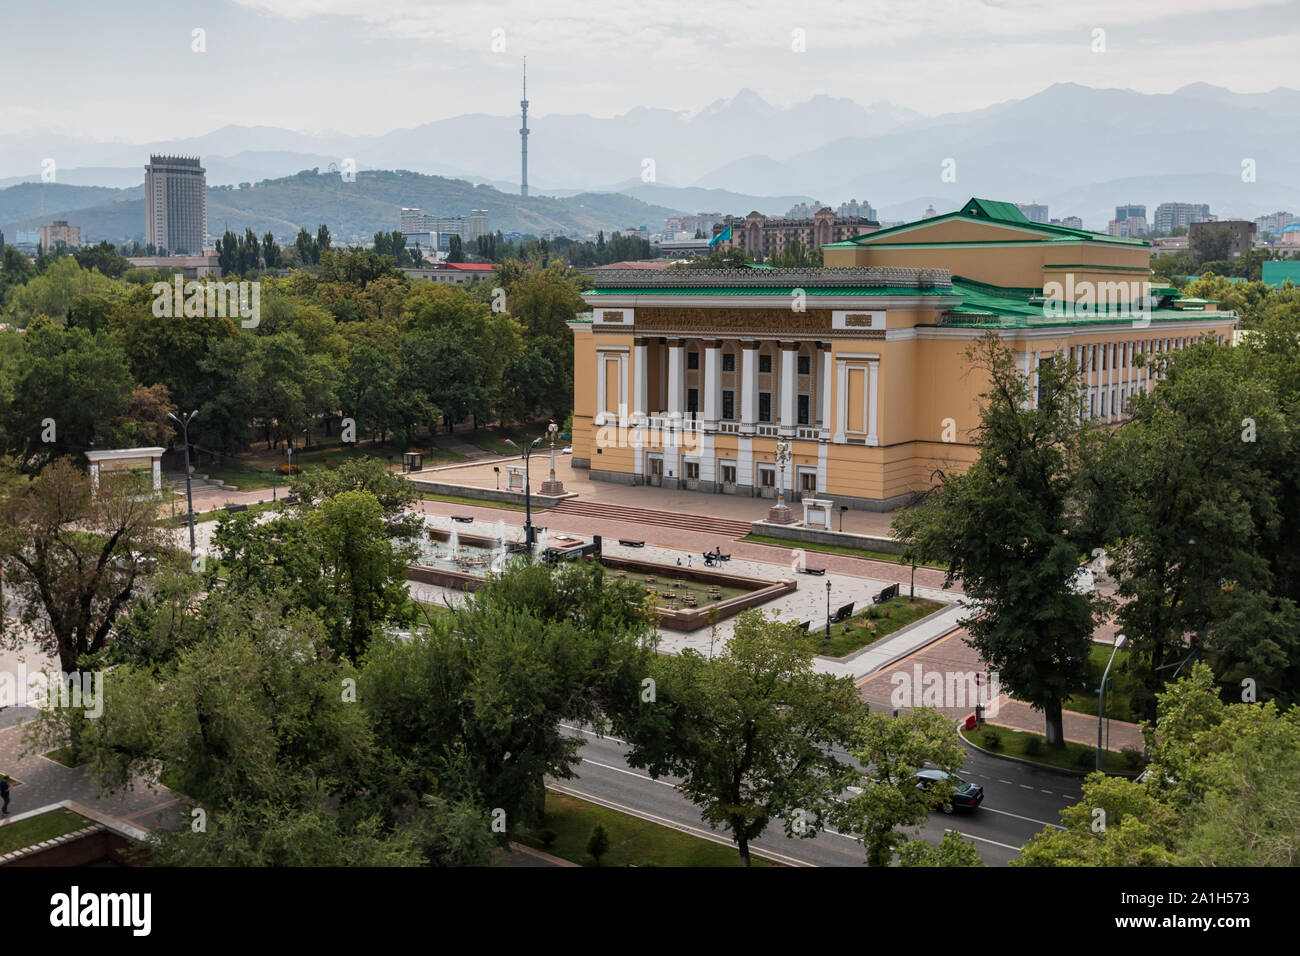 Almaty, Kazakhstan - August 9, 2019: Kazakh Opera and Ballet Theater in Almaty Stock Photo